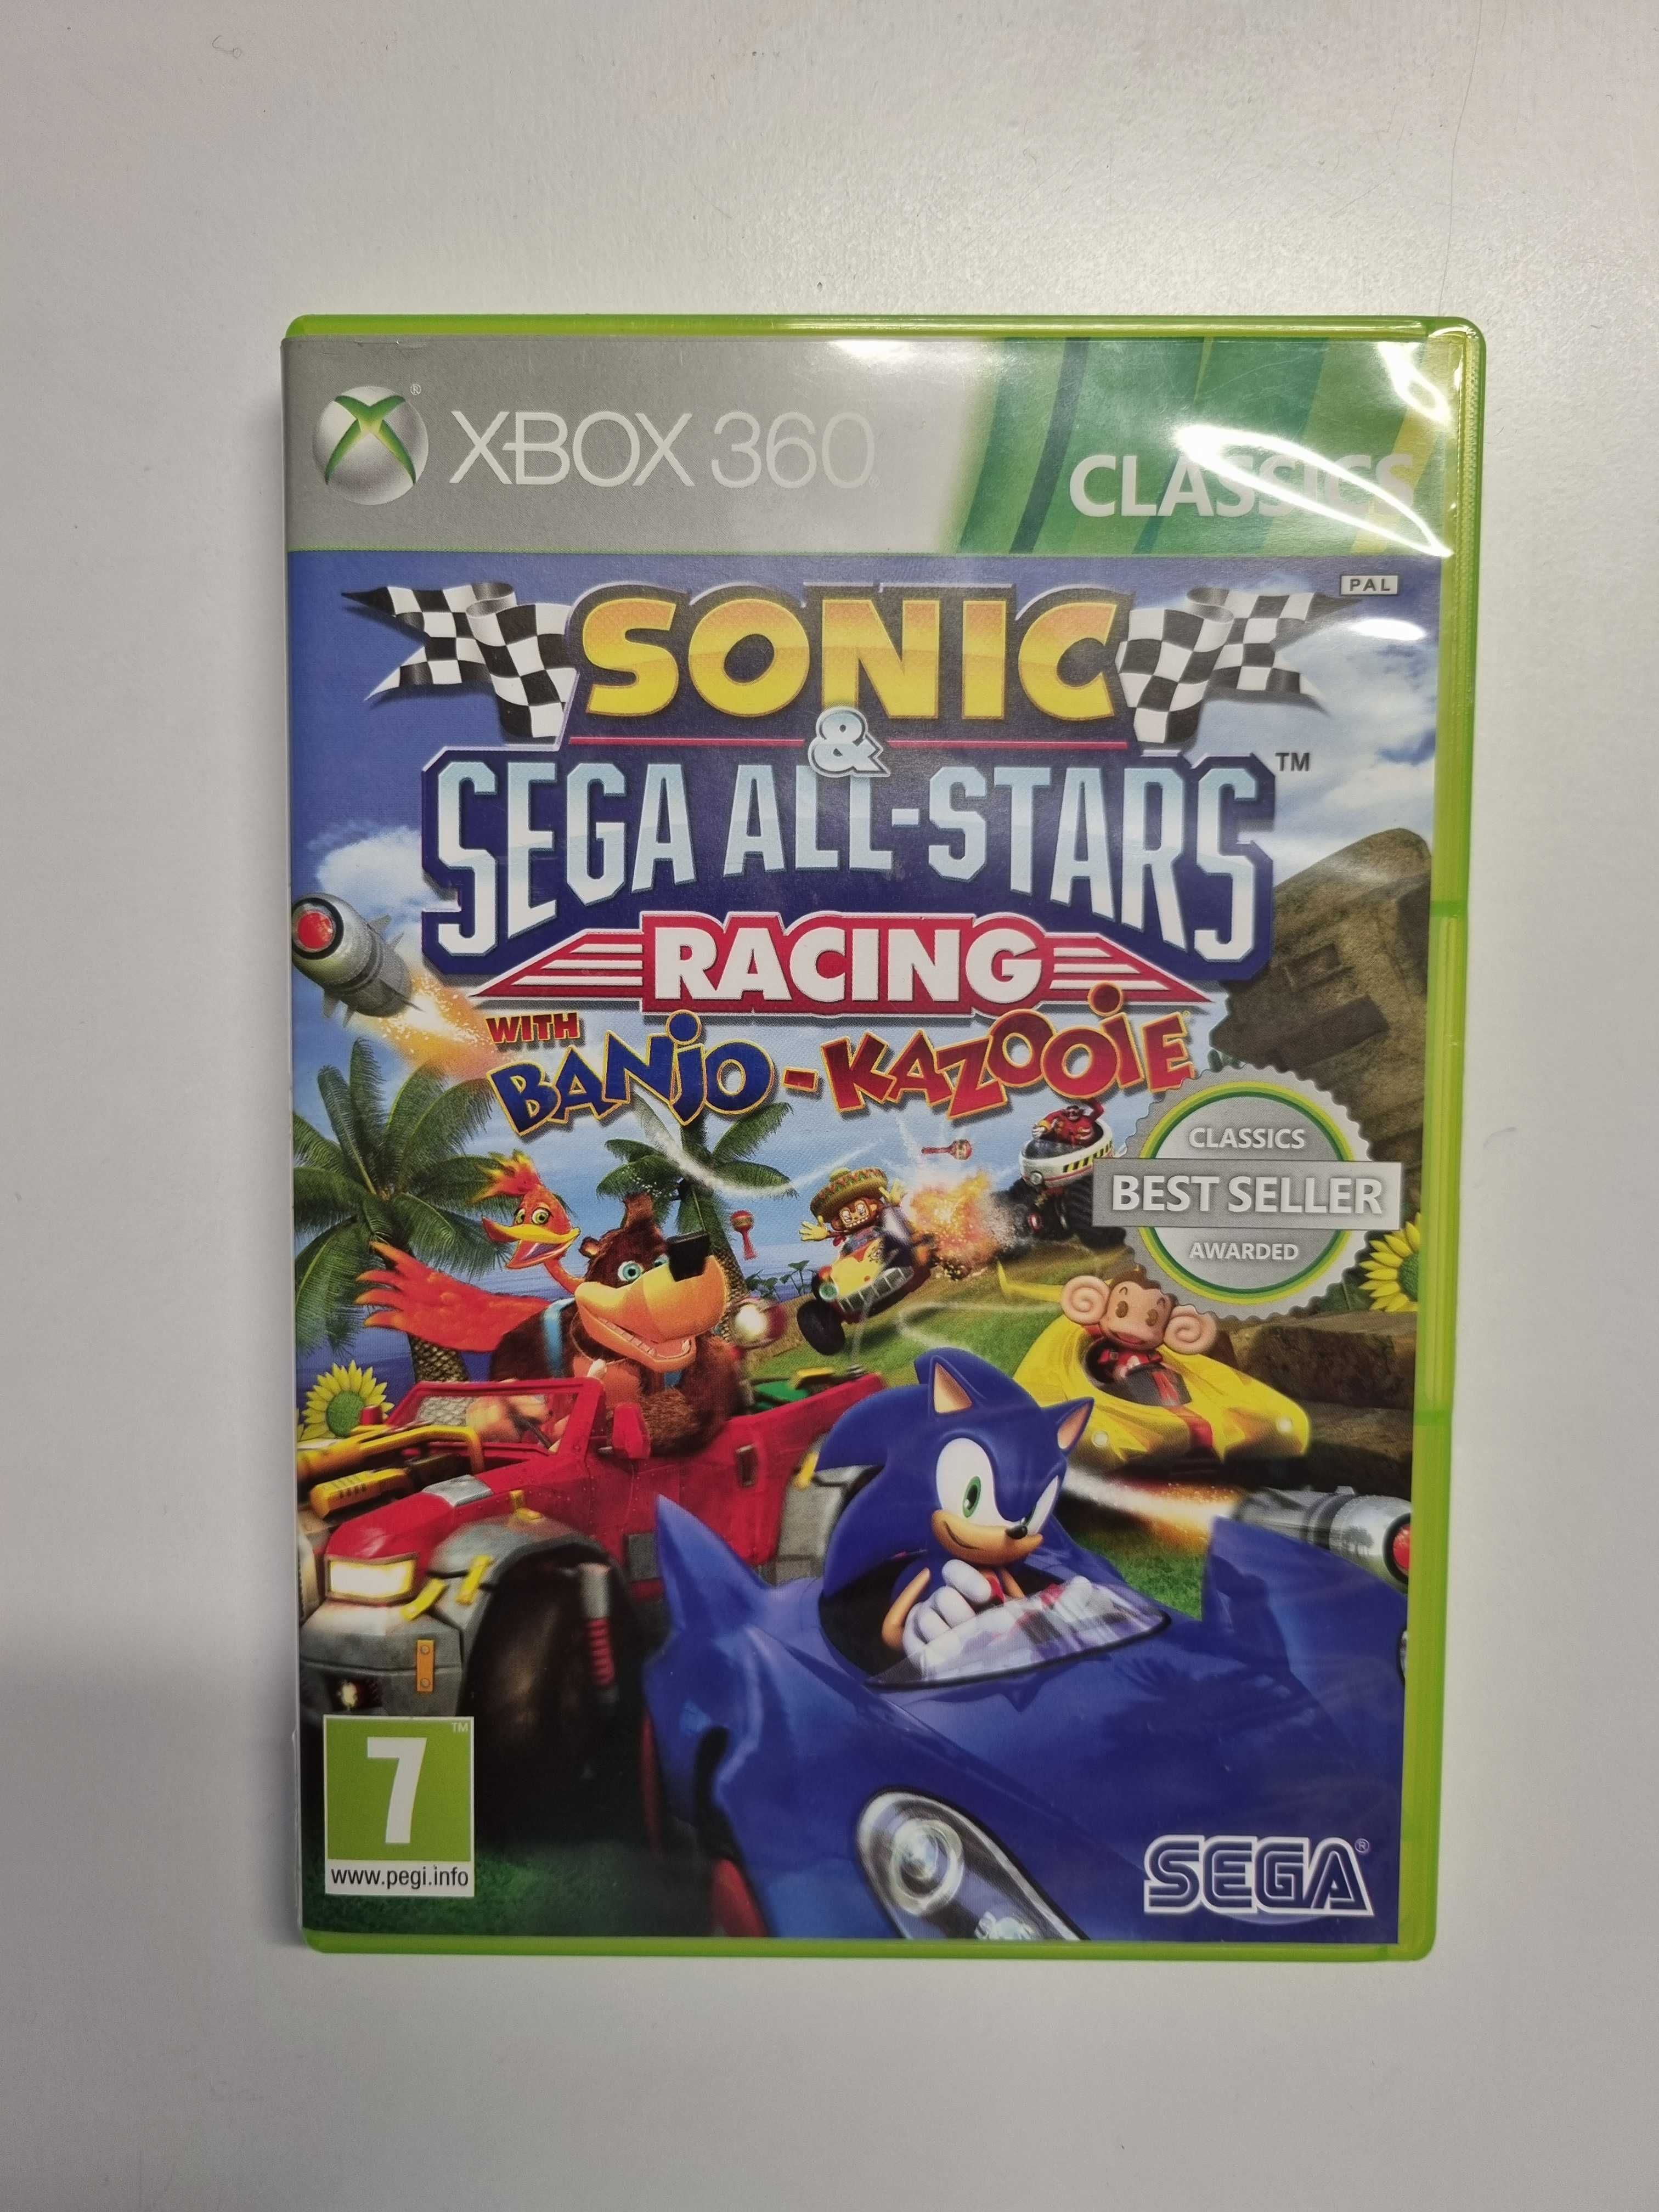 Sonic Sega All-Stars Racing with Banjo-Kazooie Xbox 360 - As Game GSM